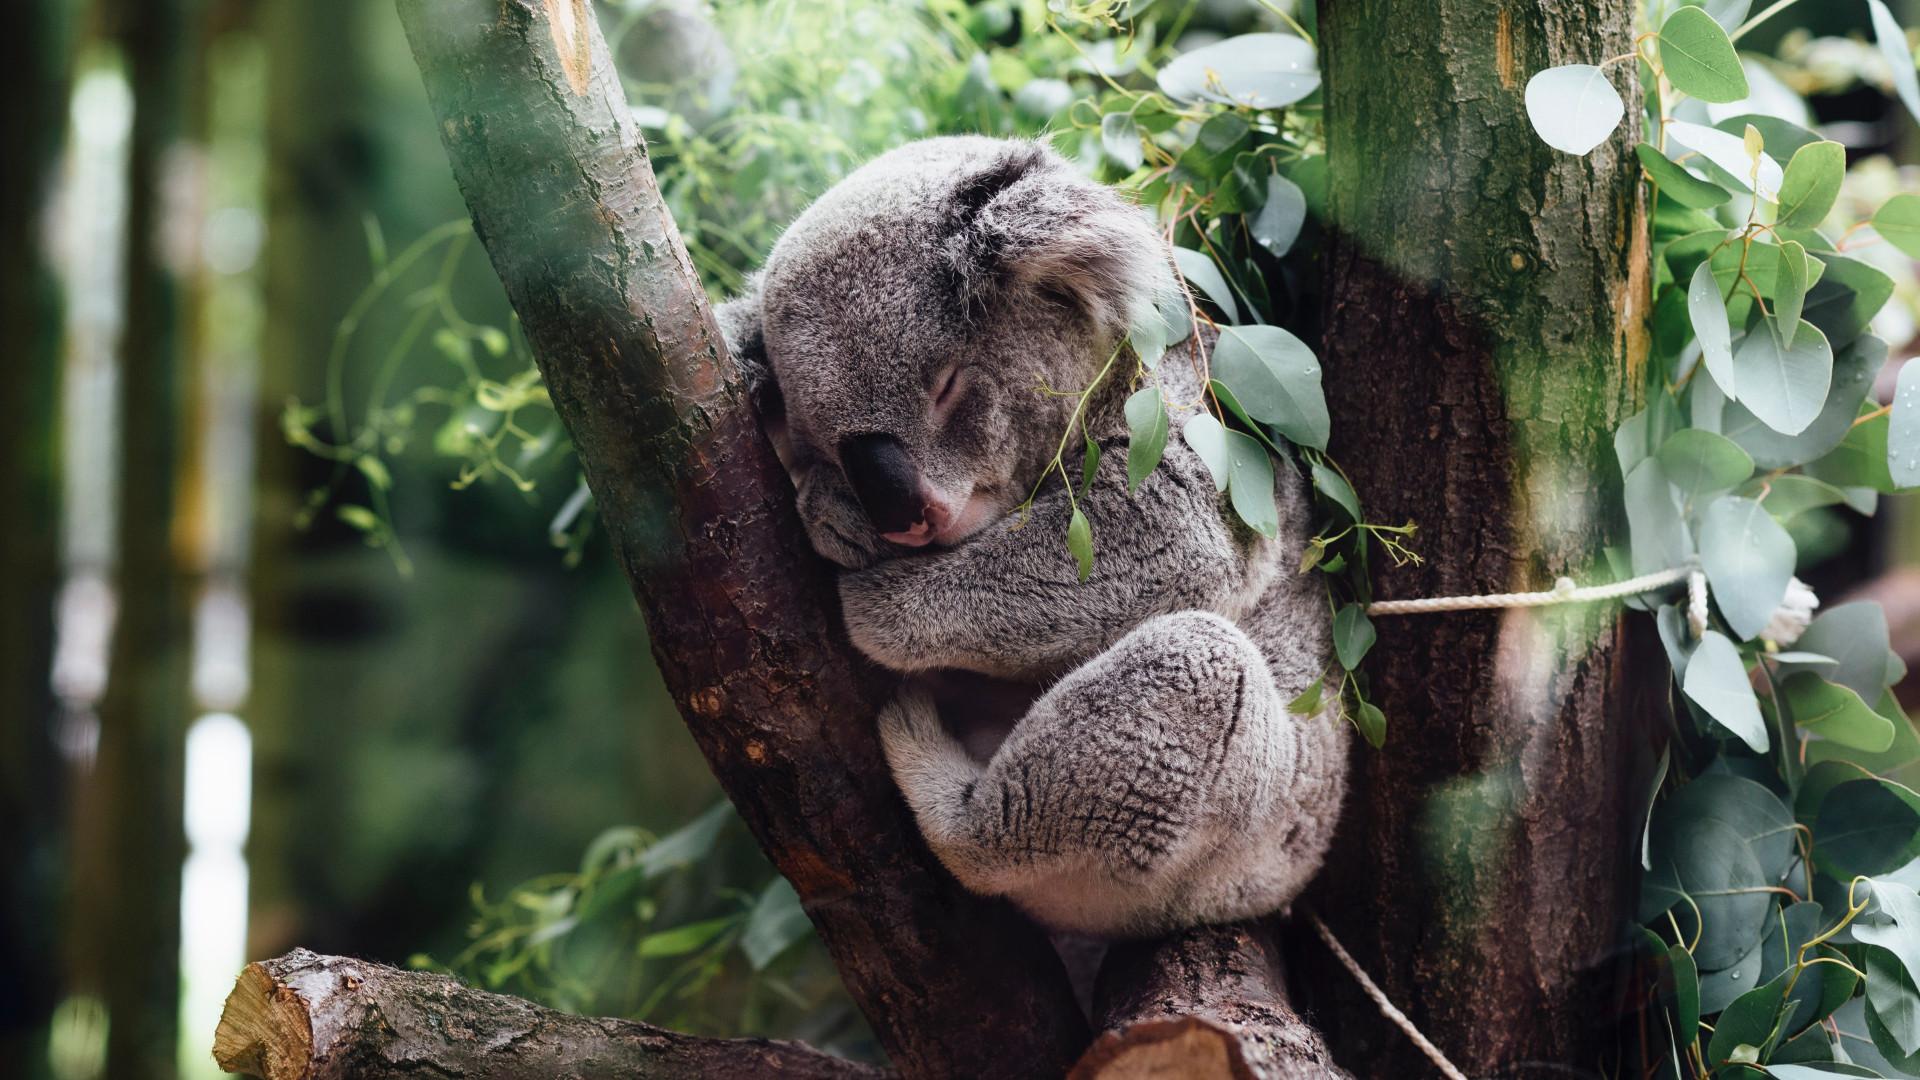 Download wallpaper: Koala bear 1920x1080